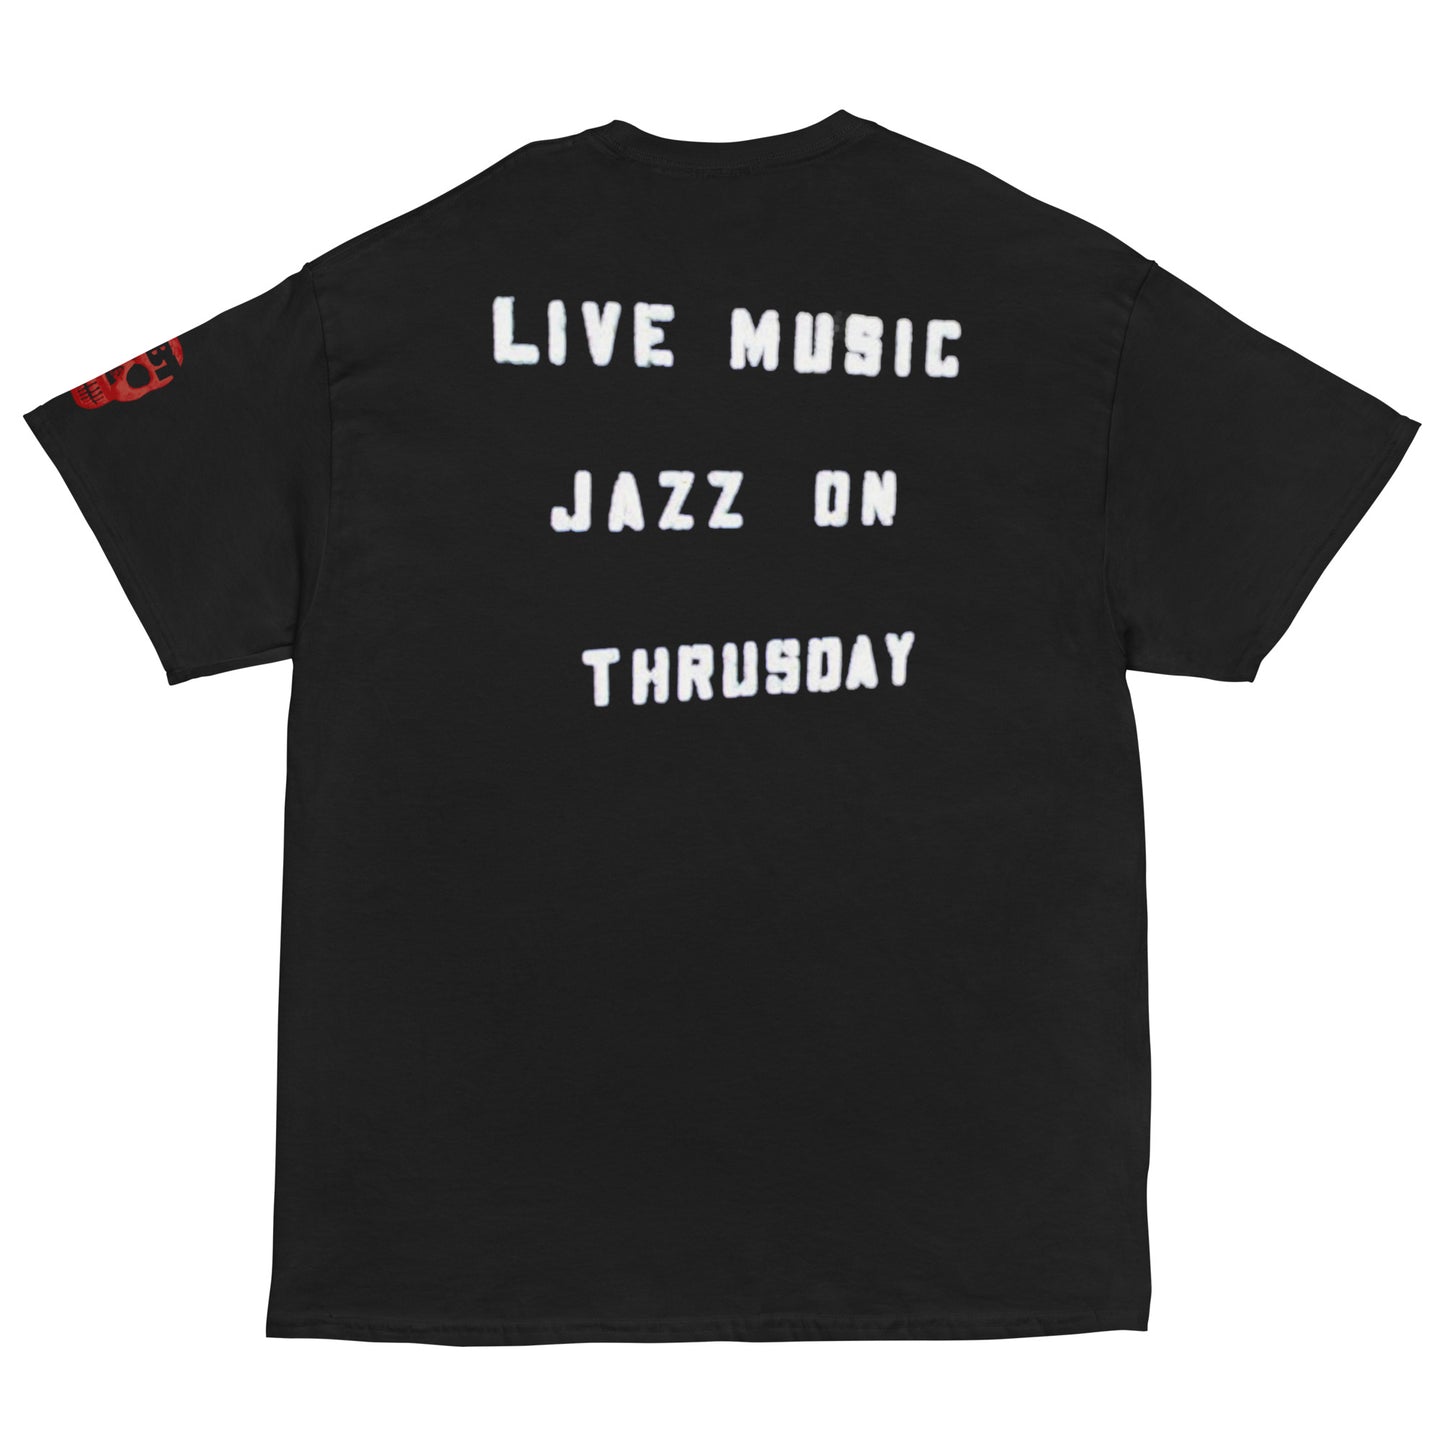 El Gato Negro • Live Music Jazz On Thrusday [sic]